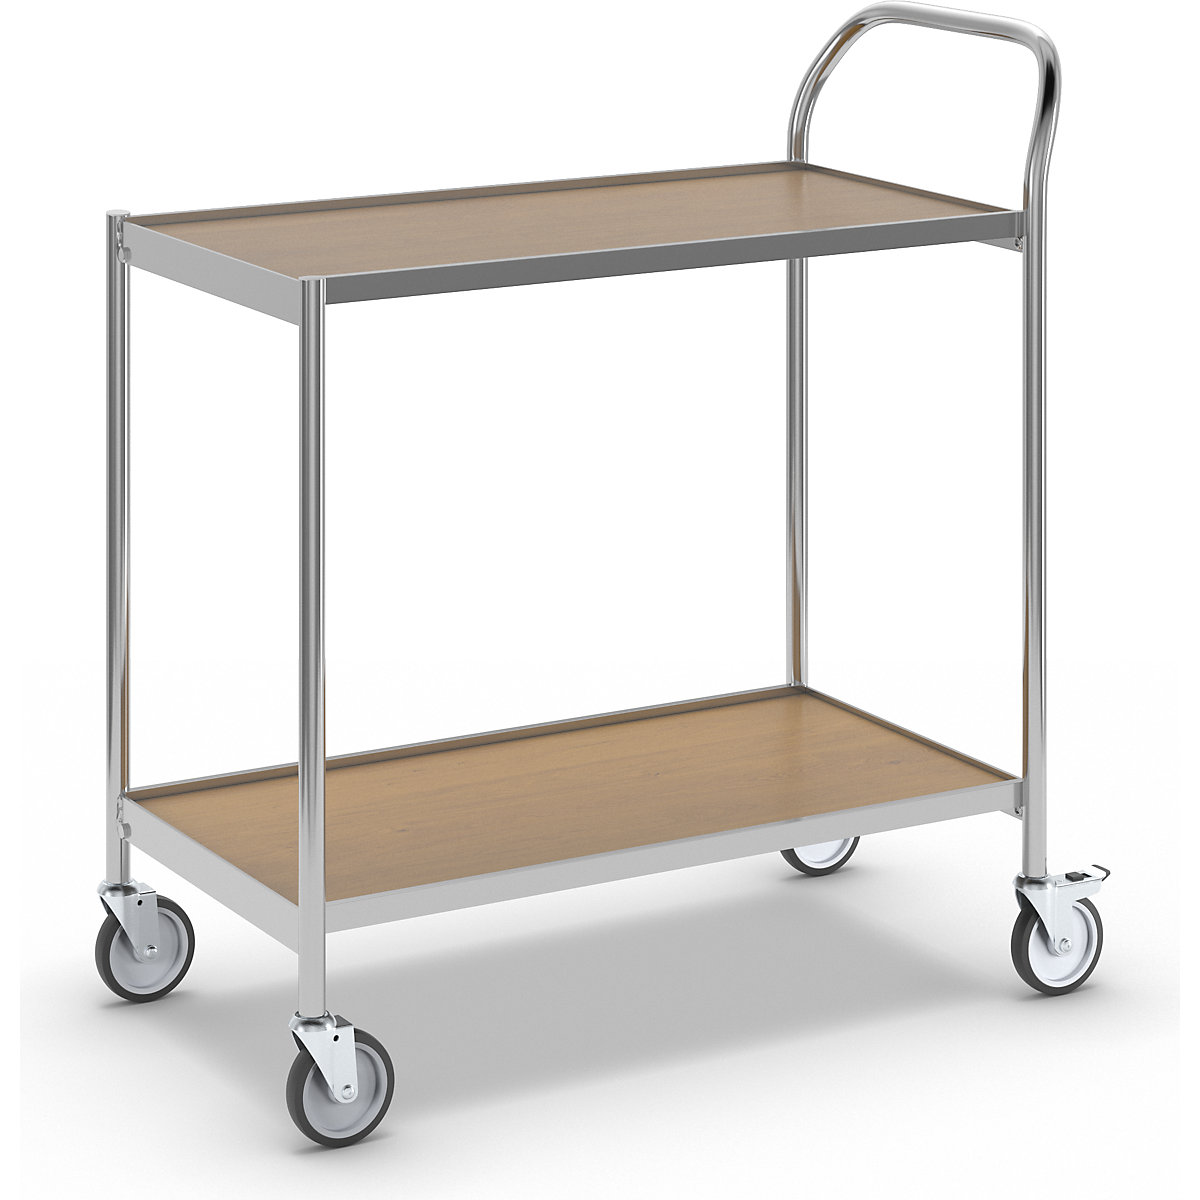 Stolový vozík – HelgeNyberg, 2 etáže, d x š 800 x 420 mm, chrom / dub-8